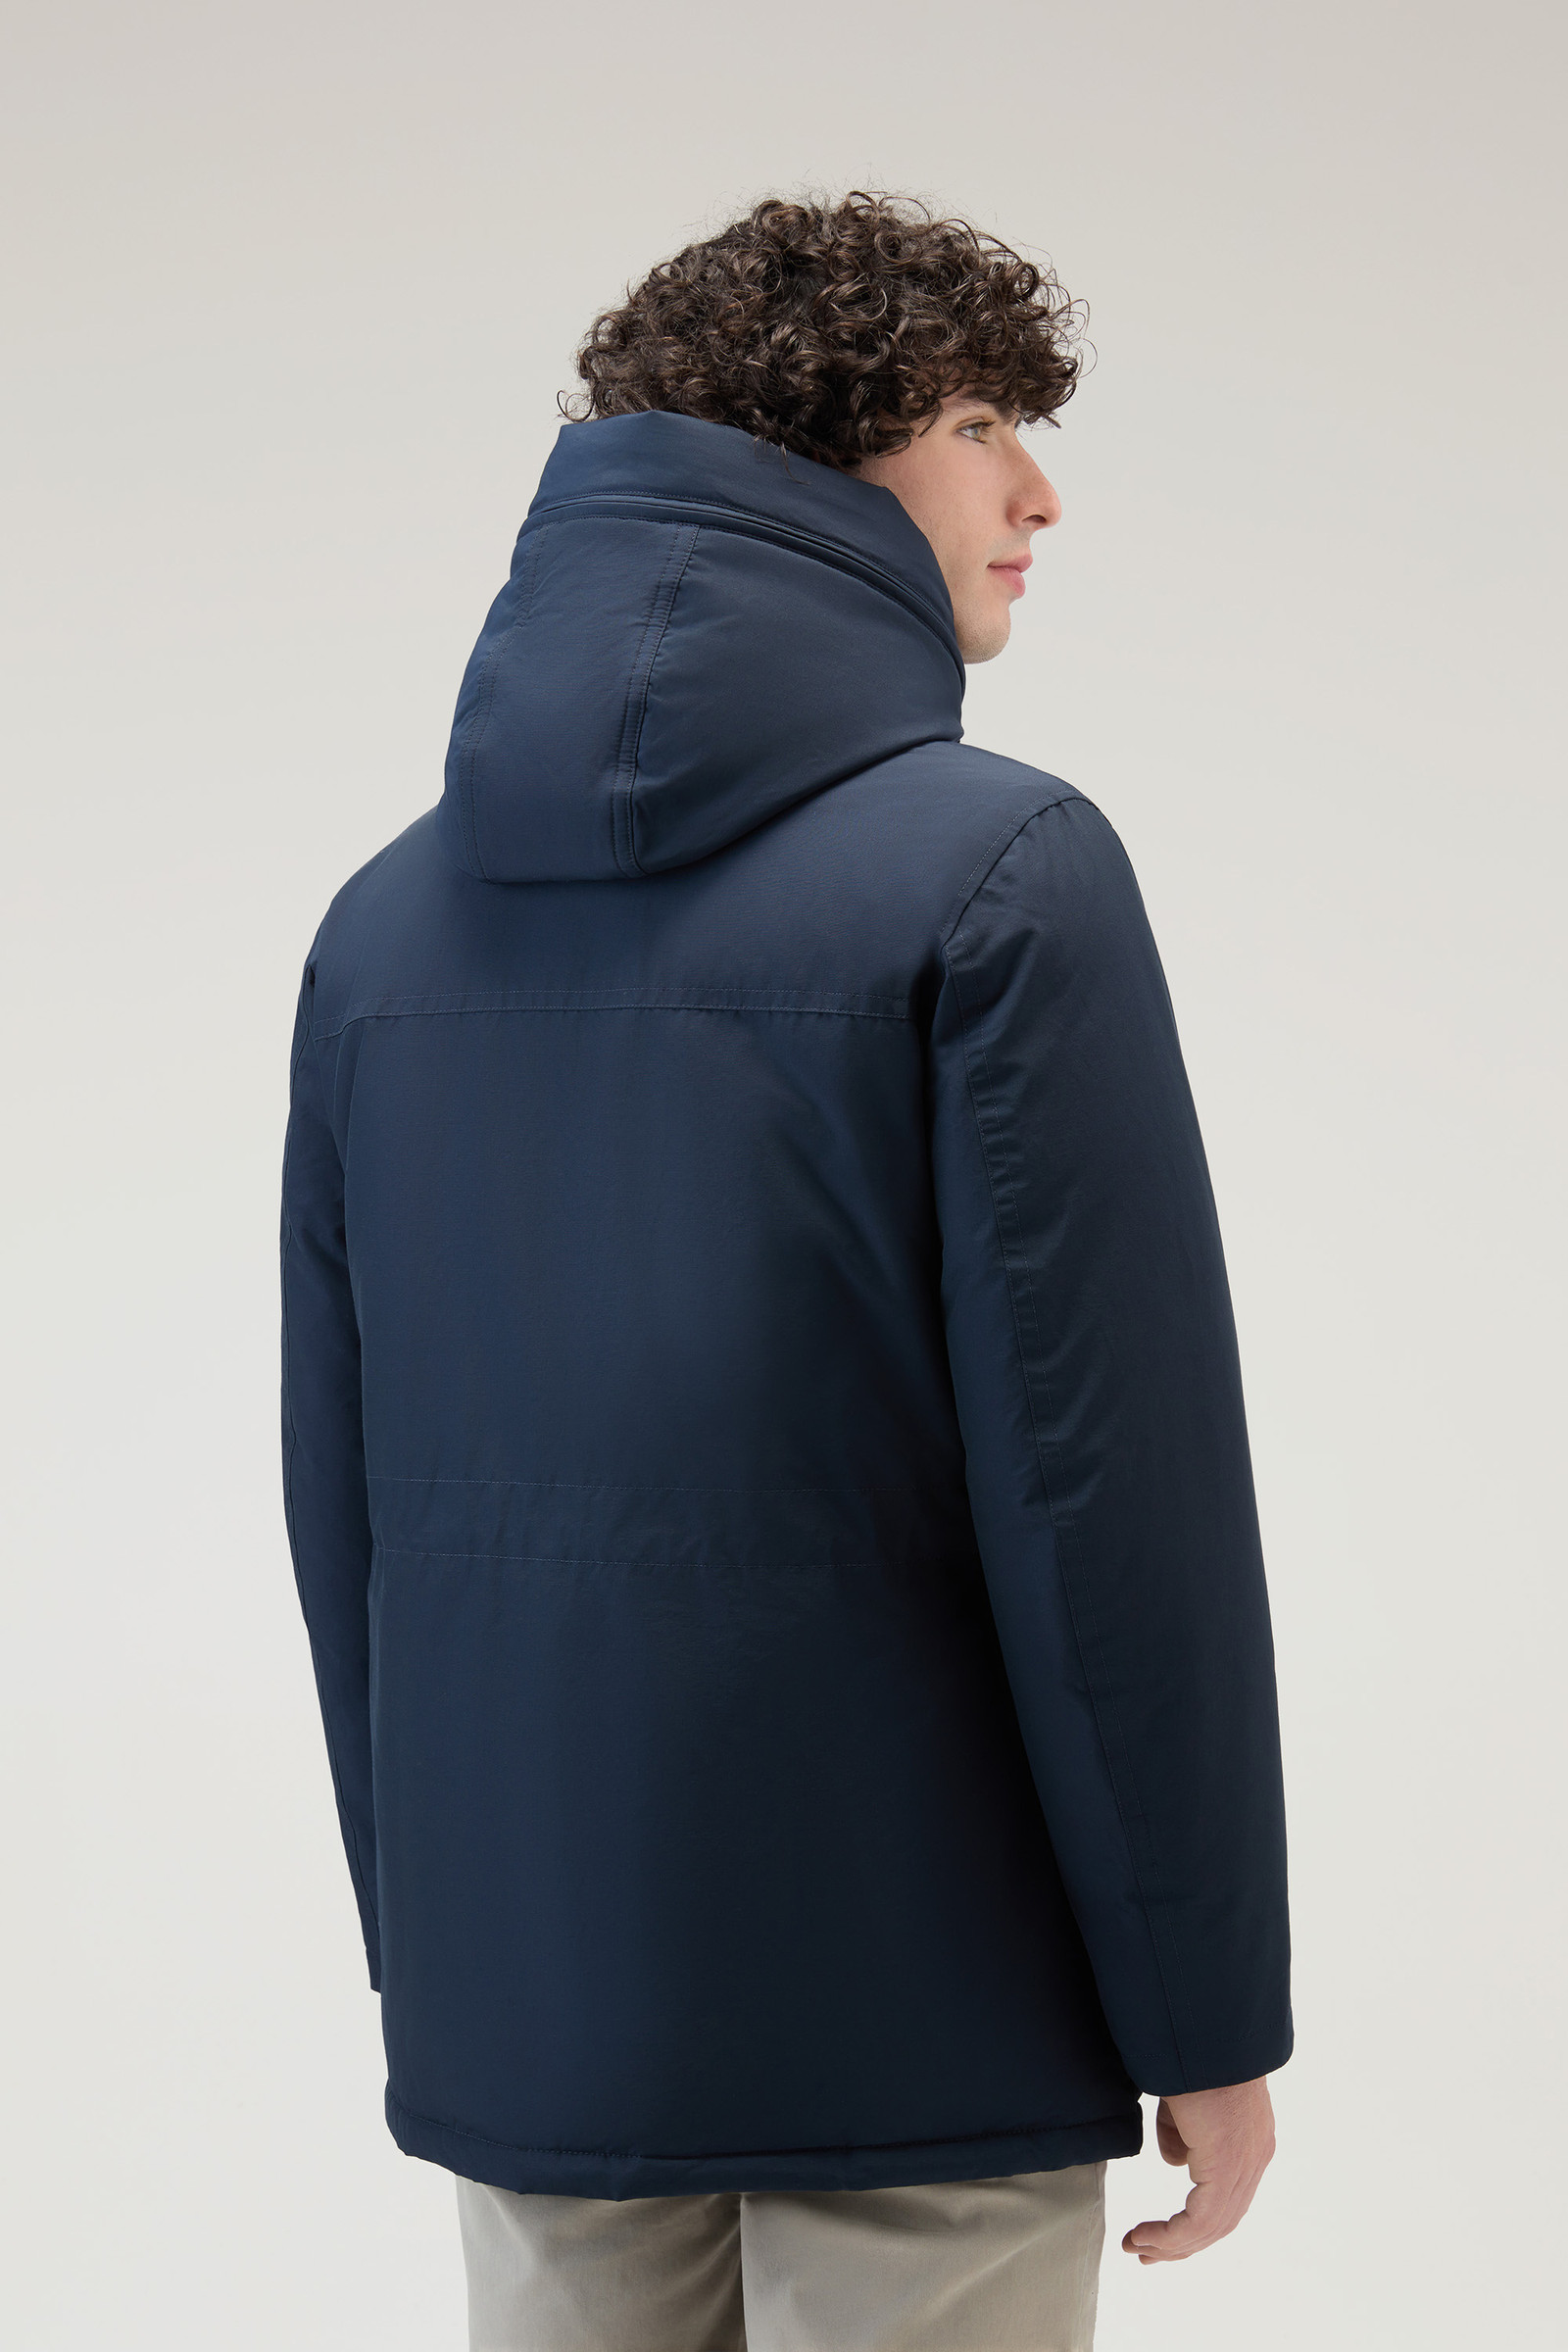 Men's Arctic Parka Evolution in Ramar Cloth Blue | Woolrich UK